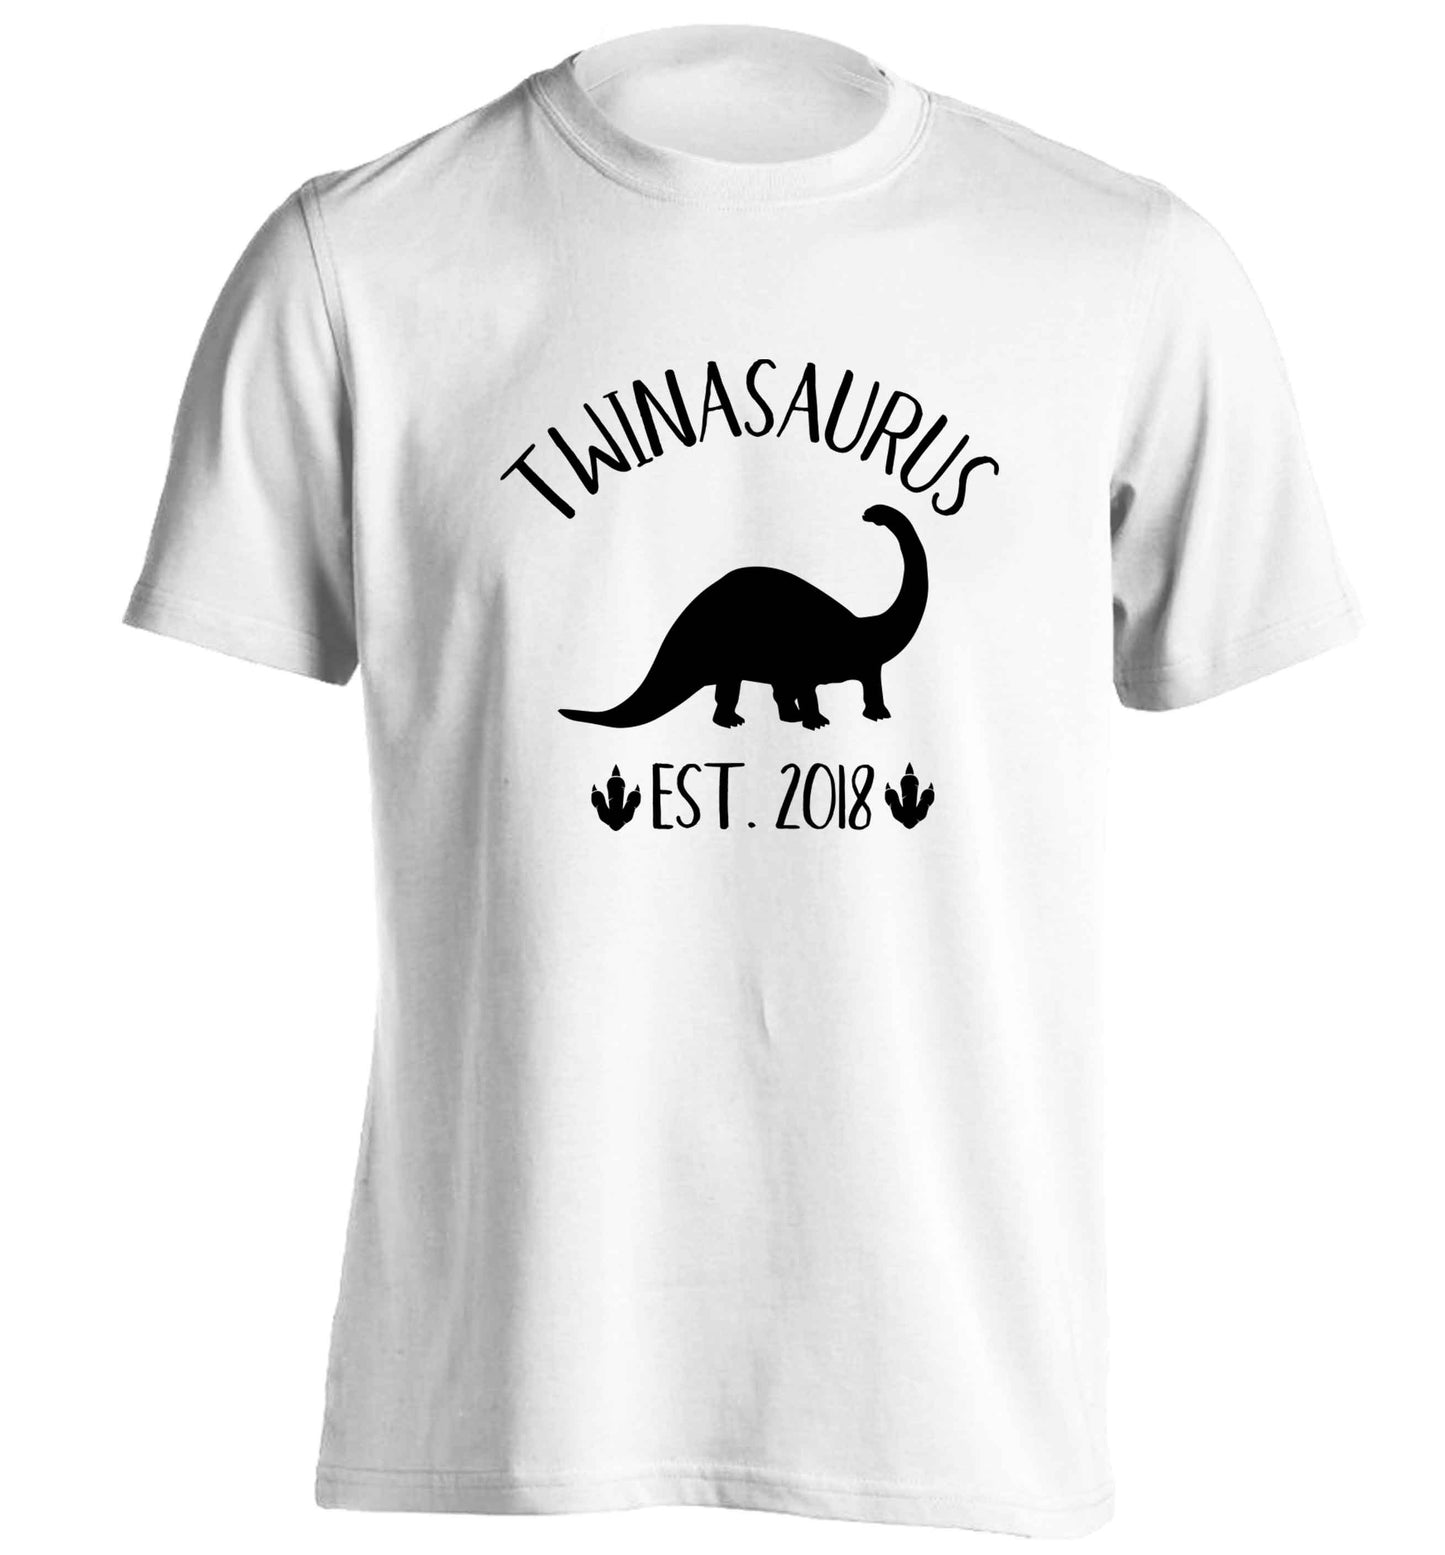 Personalised twinasaurus since (custom date) adults unisex white Tshirt 2XL